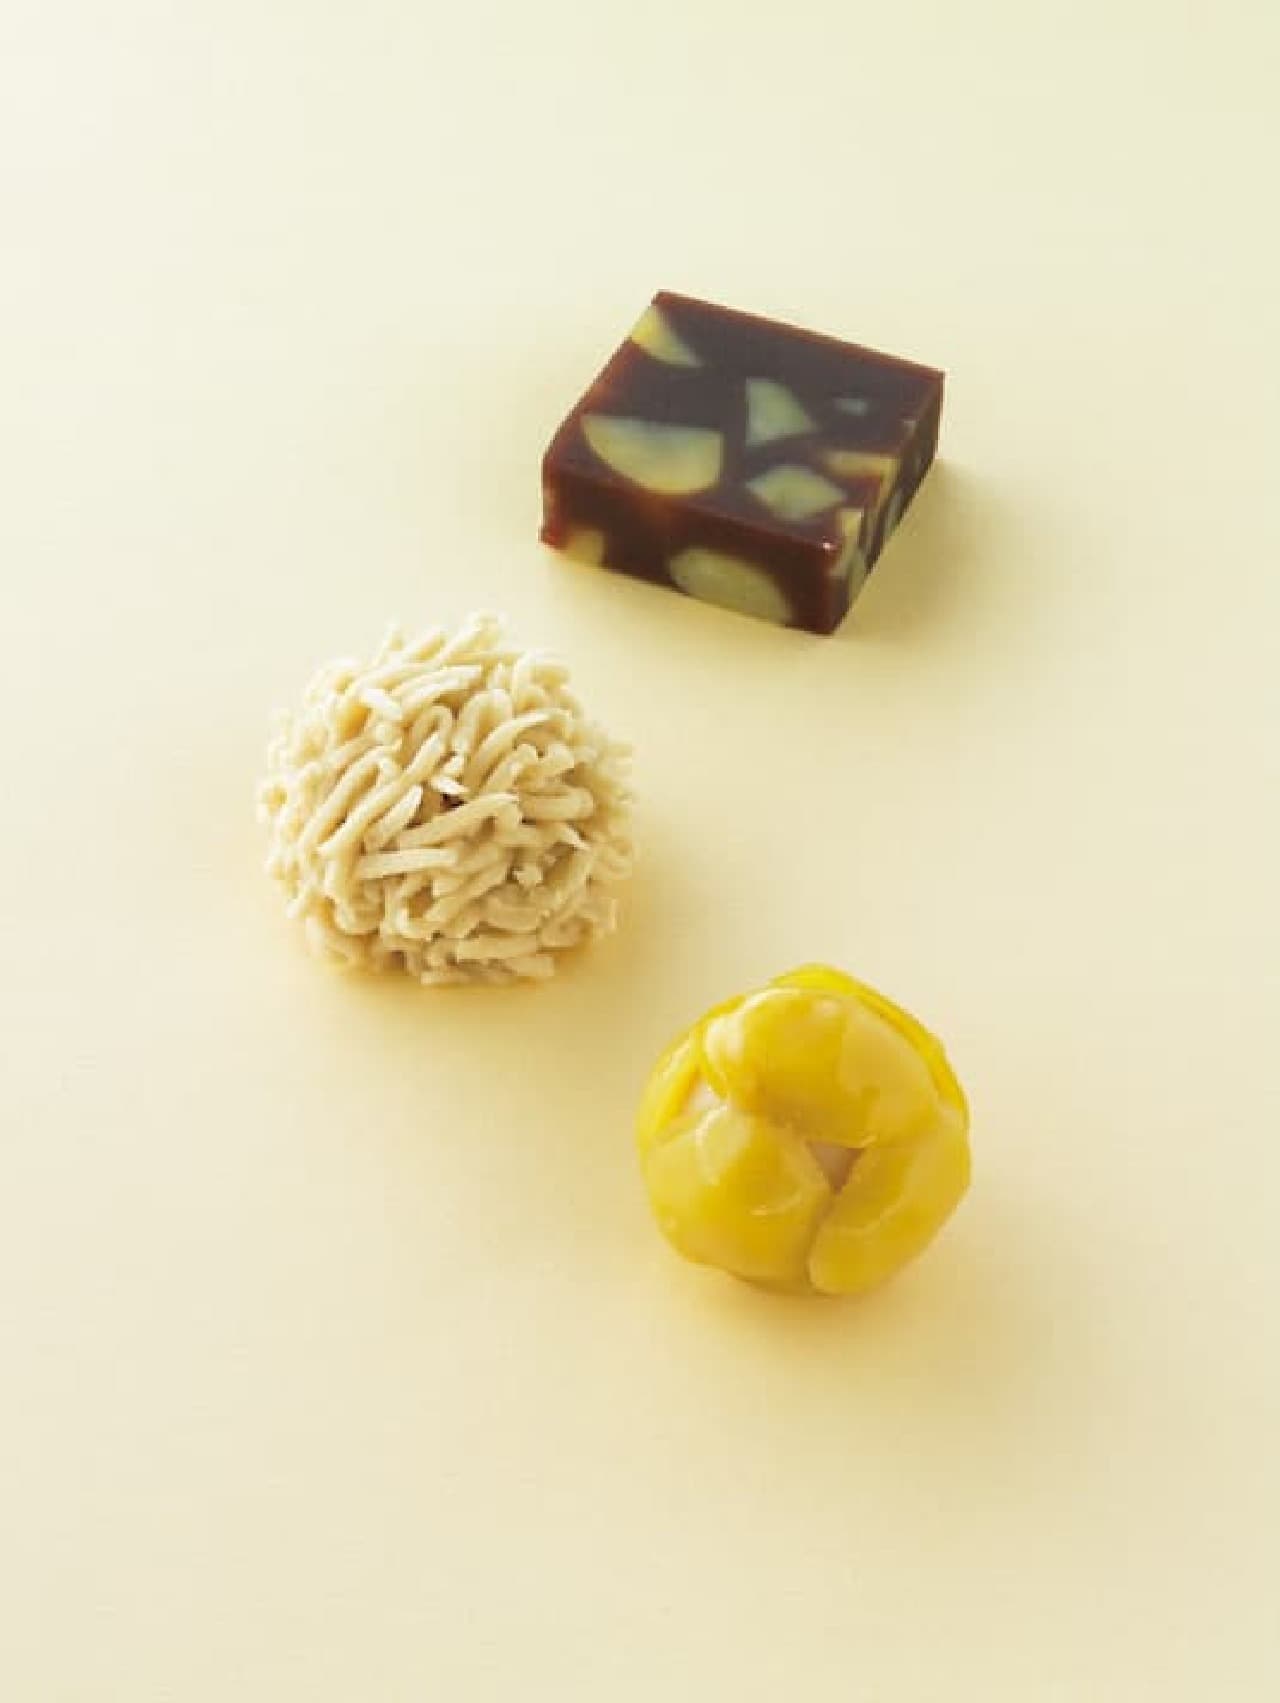 Sweets using Toraya "Chestnuts